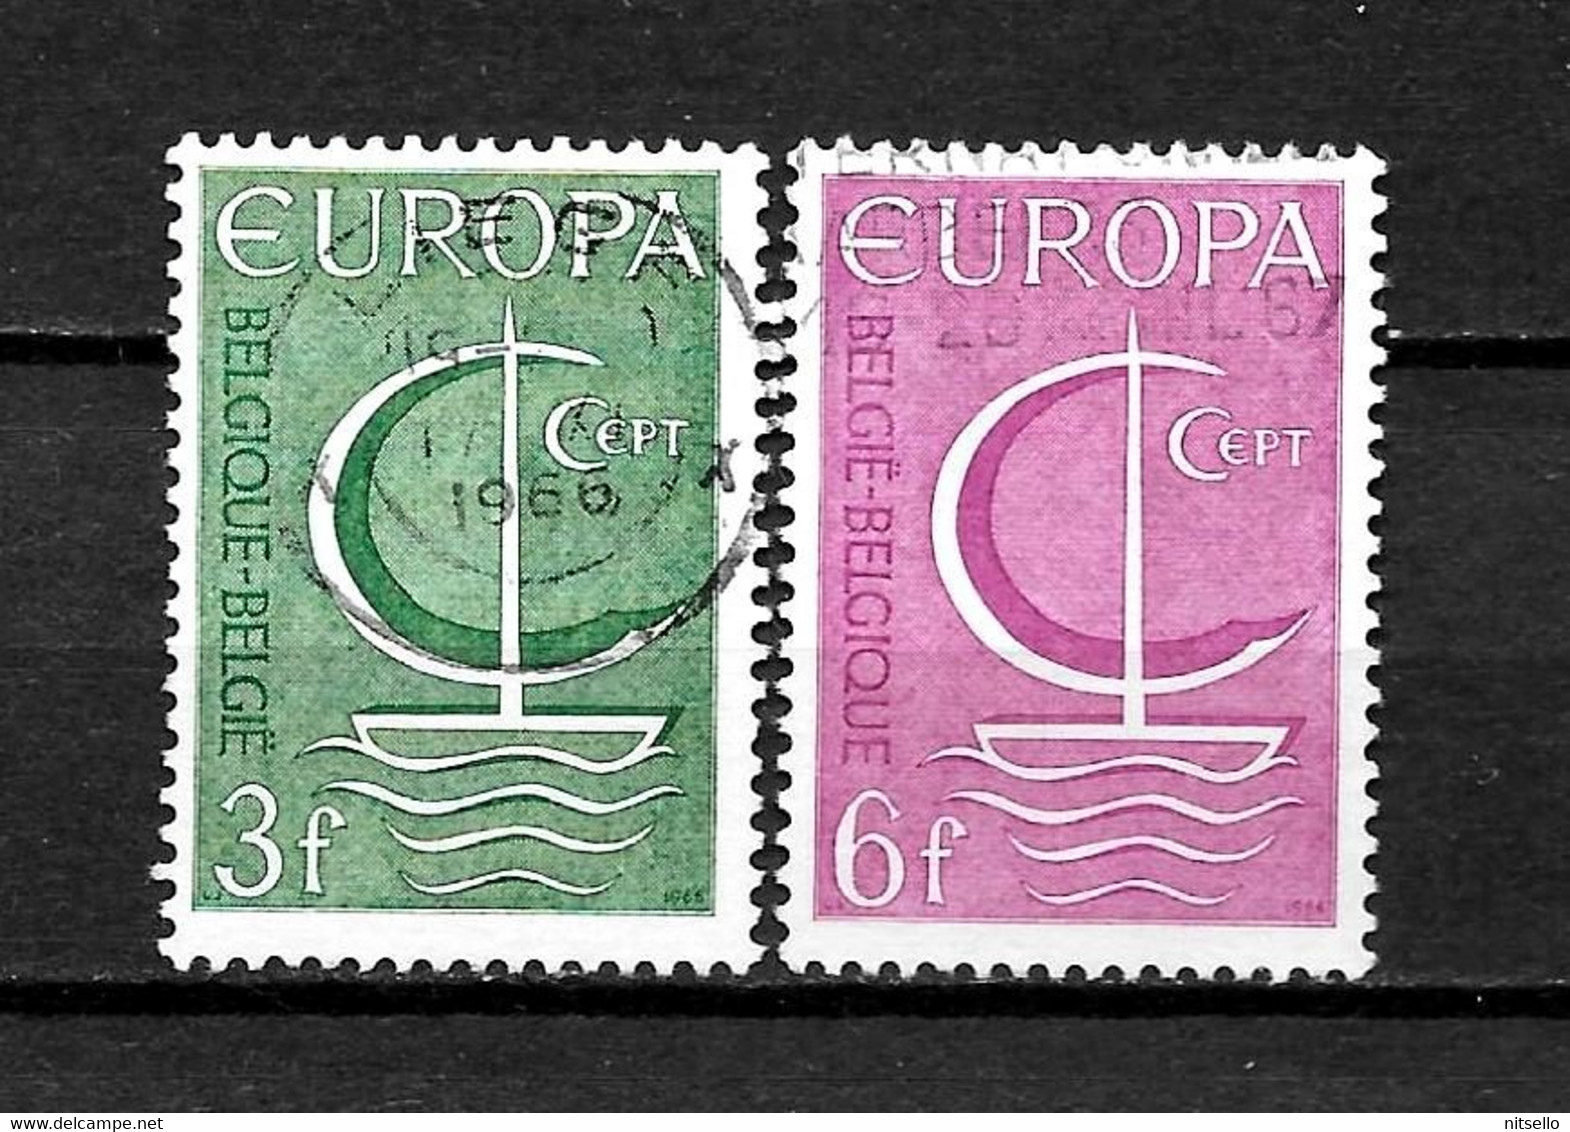 LOTE 2179 /// BELGICA  TEMA EUROPA // YVERT Nº: 1389/90   ¡¡¡ OFERTA - LIQUIDATION - JE LIQUIDE !!! - Used Stamps